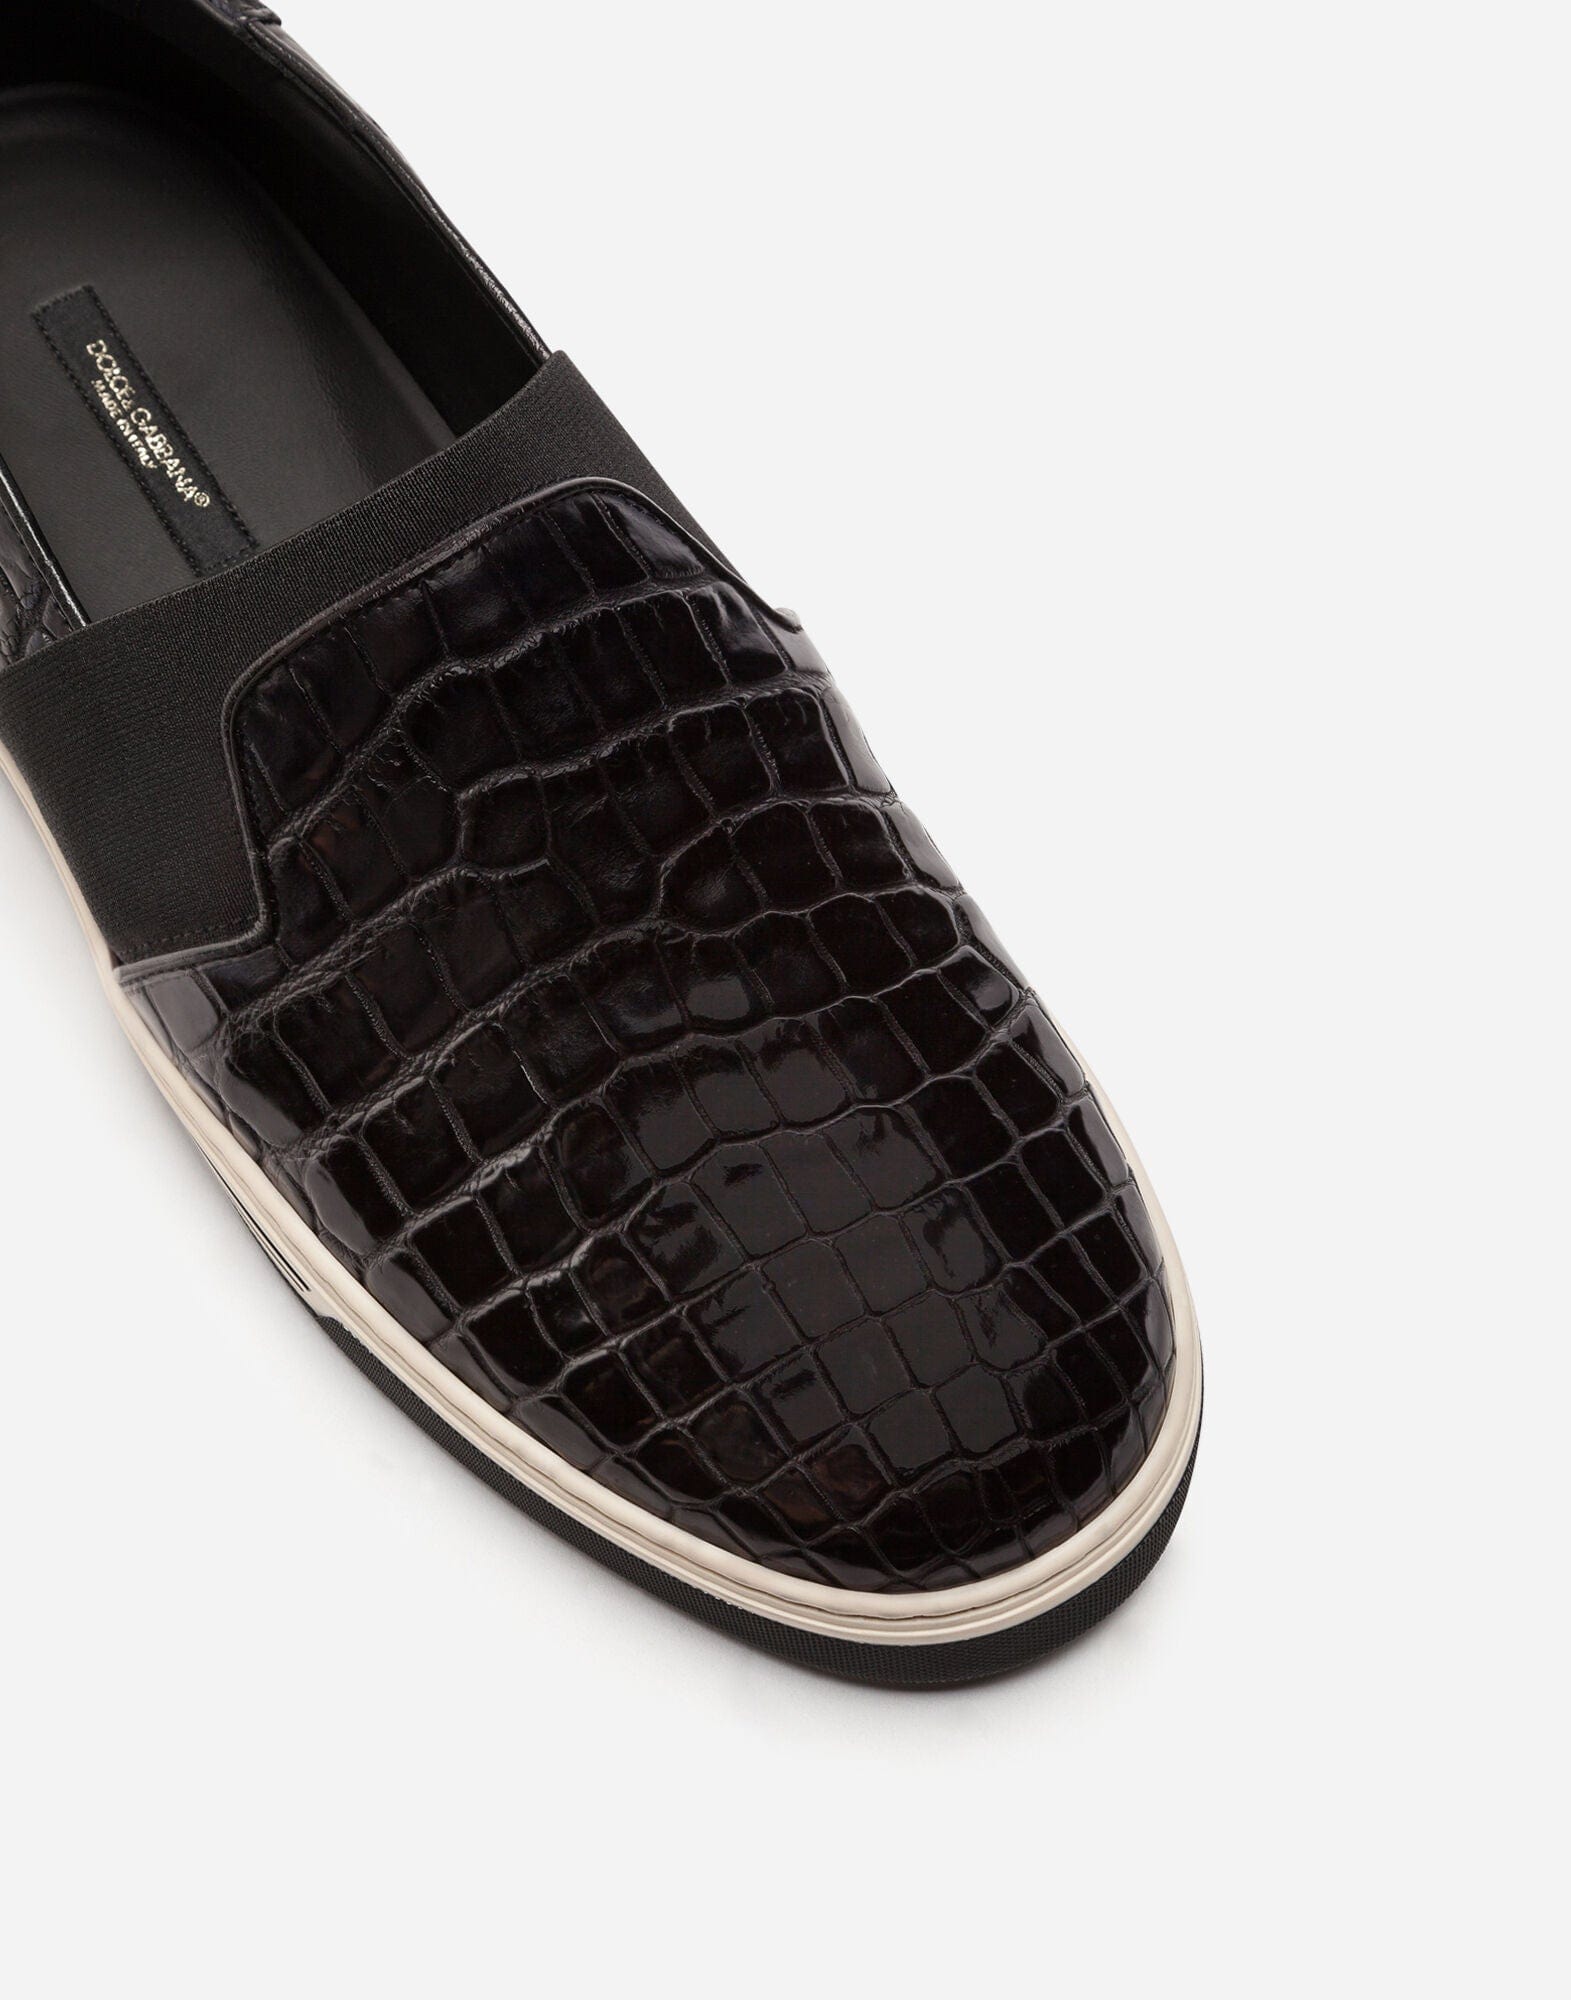 Dolce & Gabbana Rome Slip-On Sneakers In Crocodile Leather